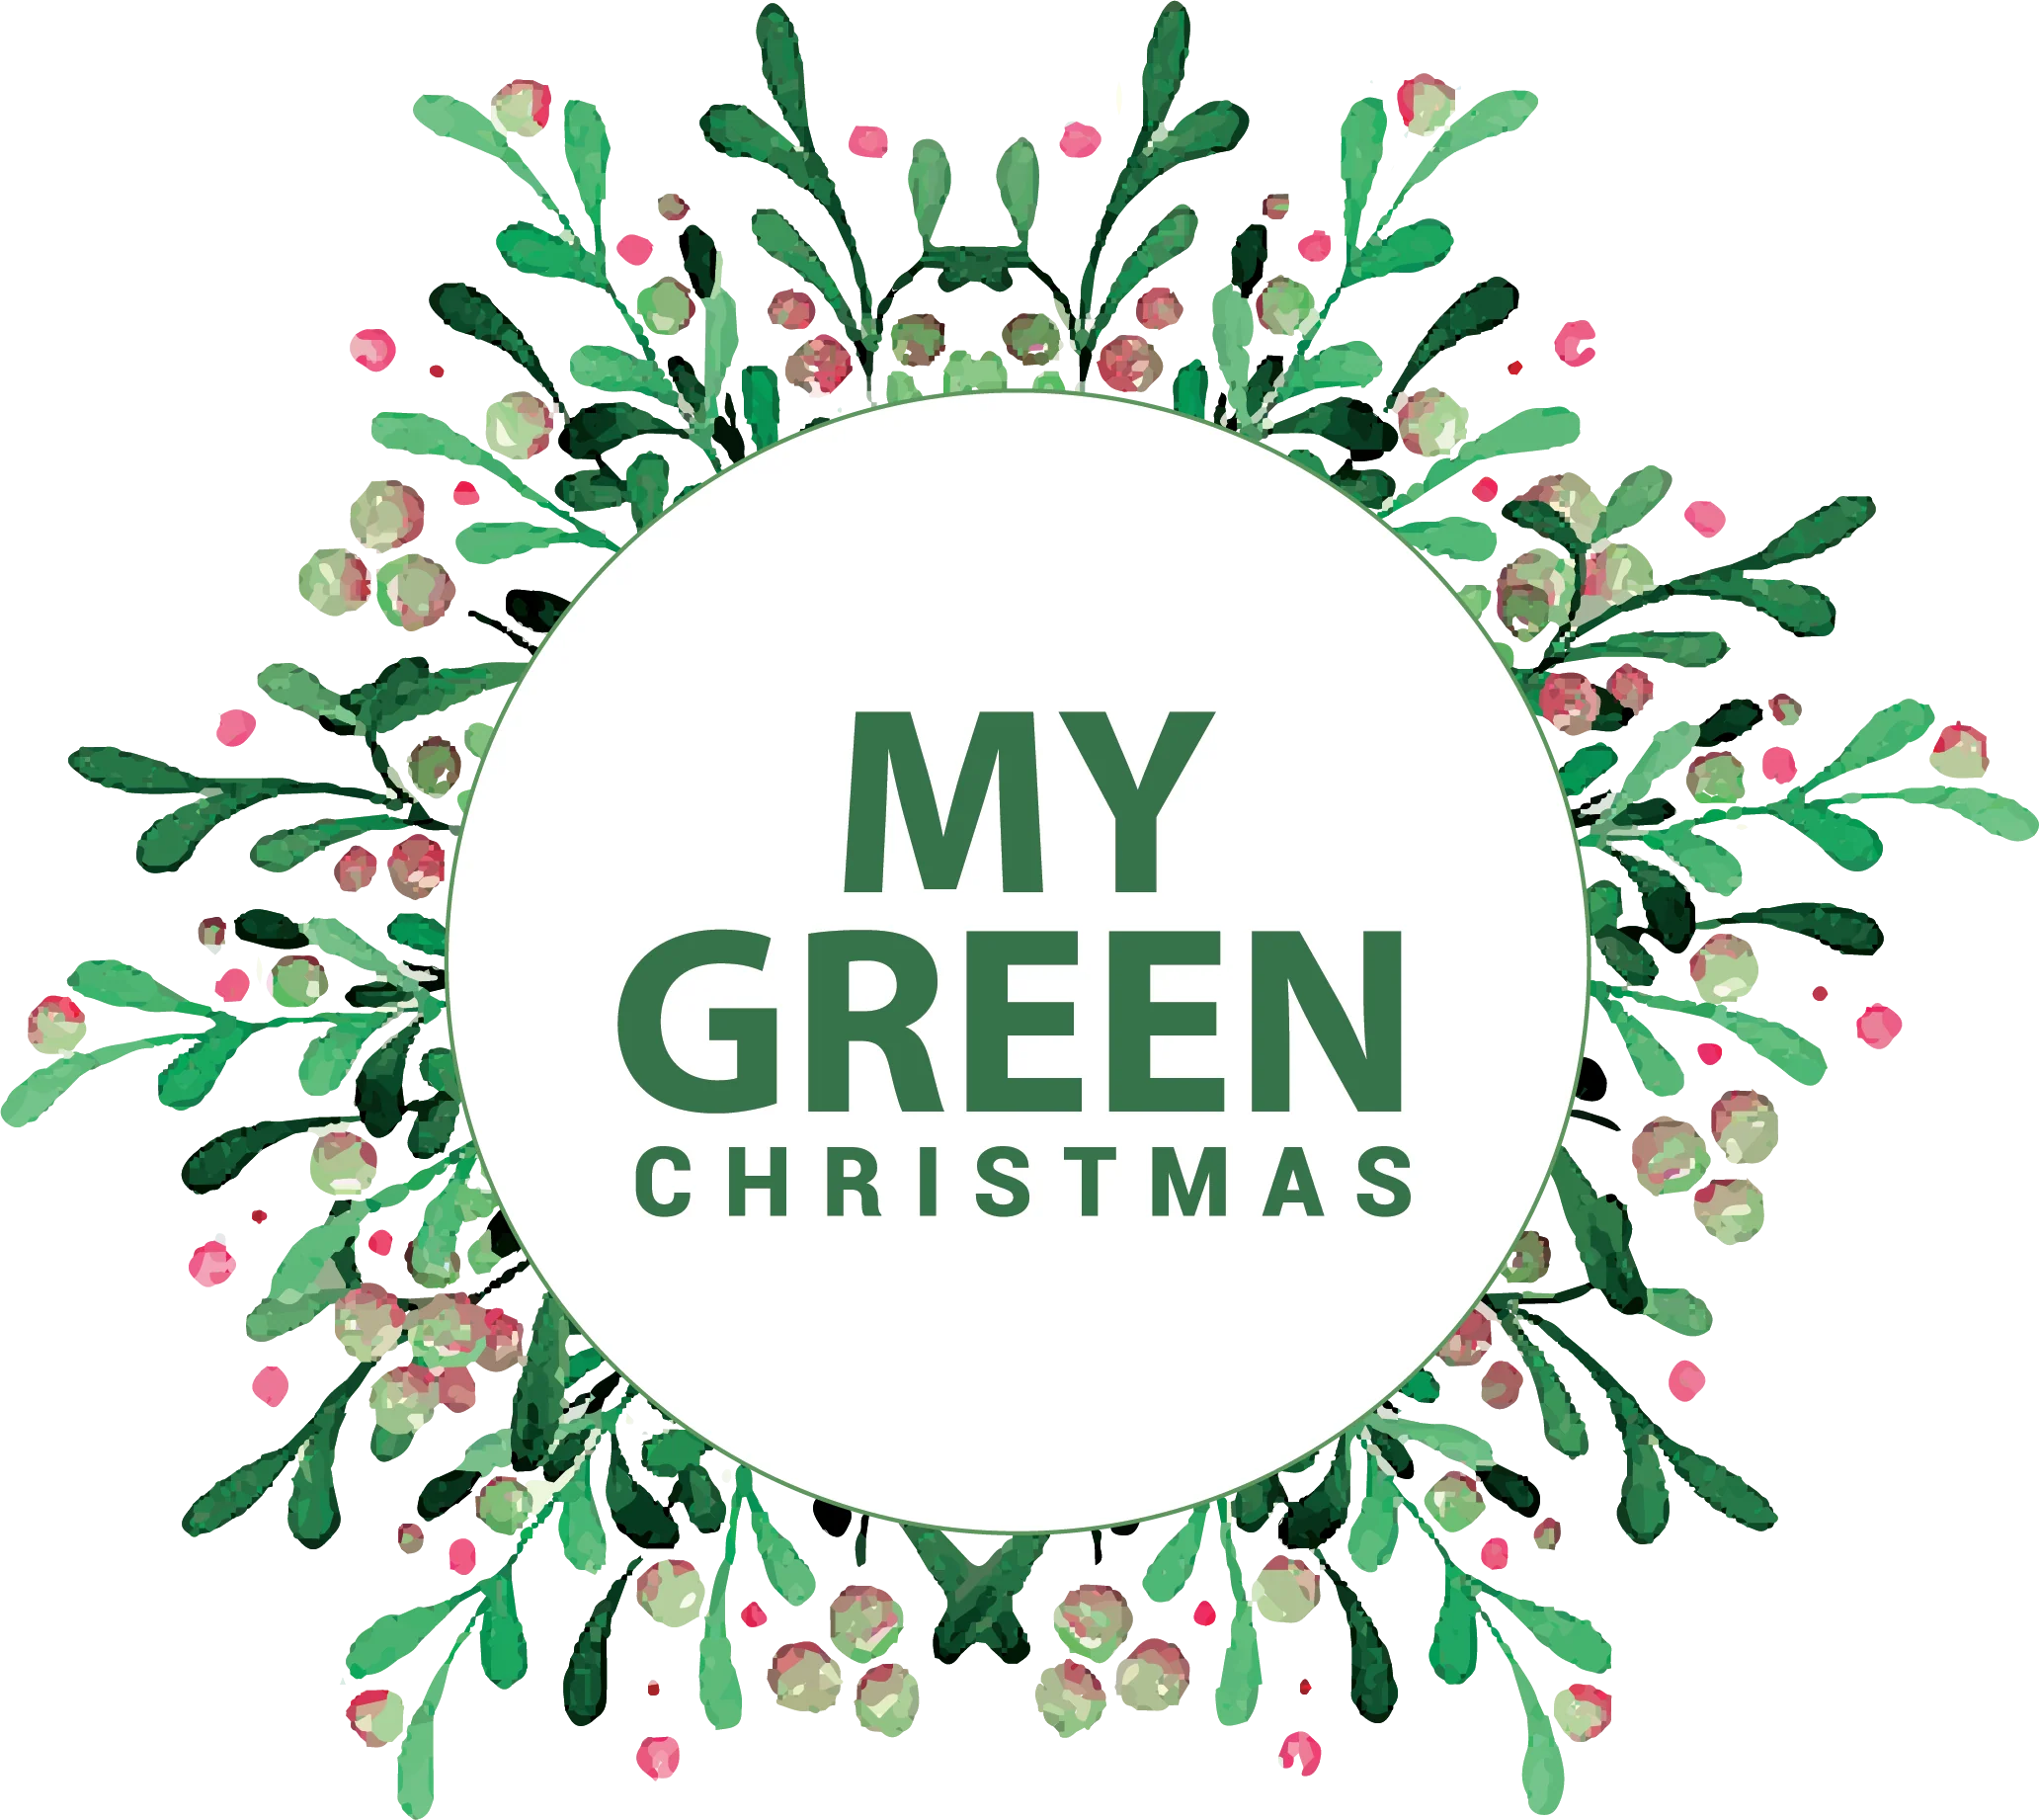 My green christmas logo more trees